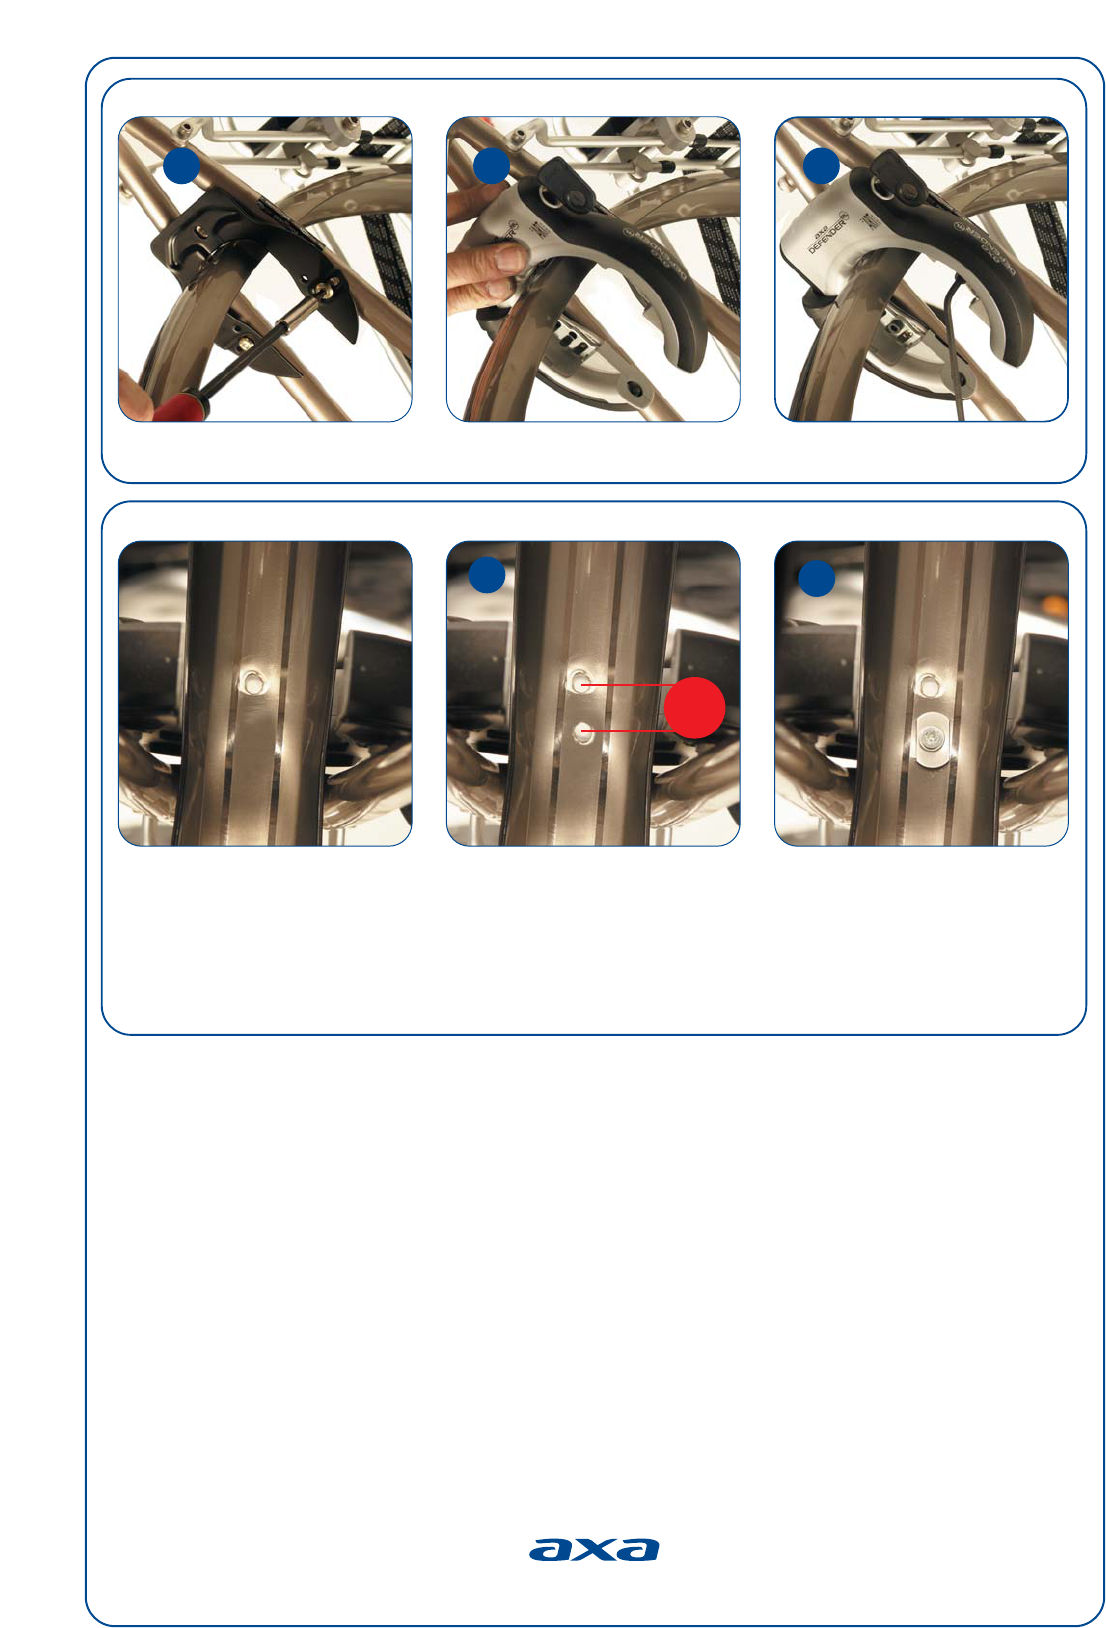 Onbemand matig interval Handleiding Axa Defender RL montage spatbord (pagina 2 van 2) (Nederlands)